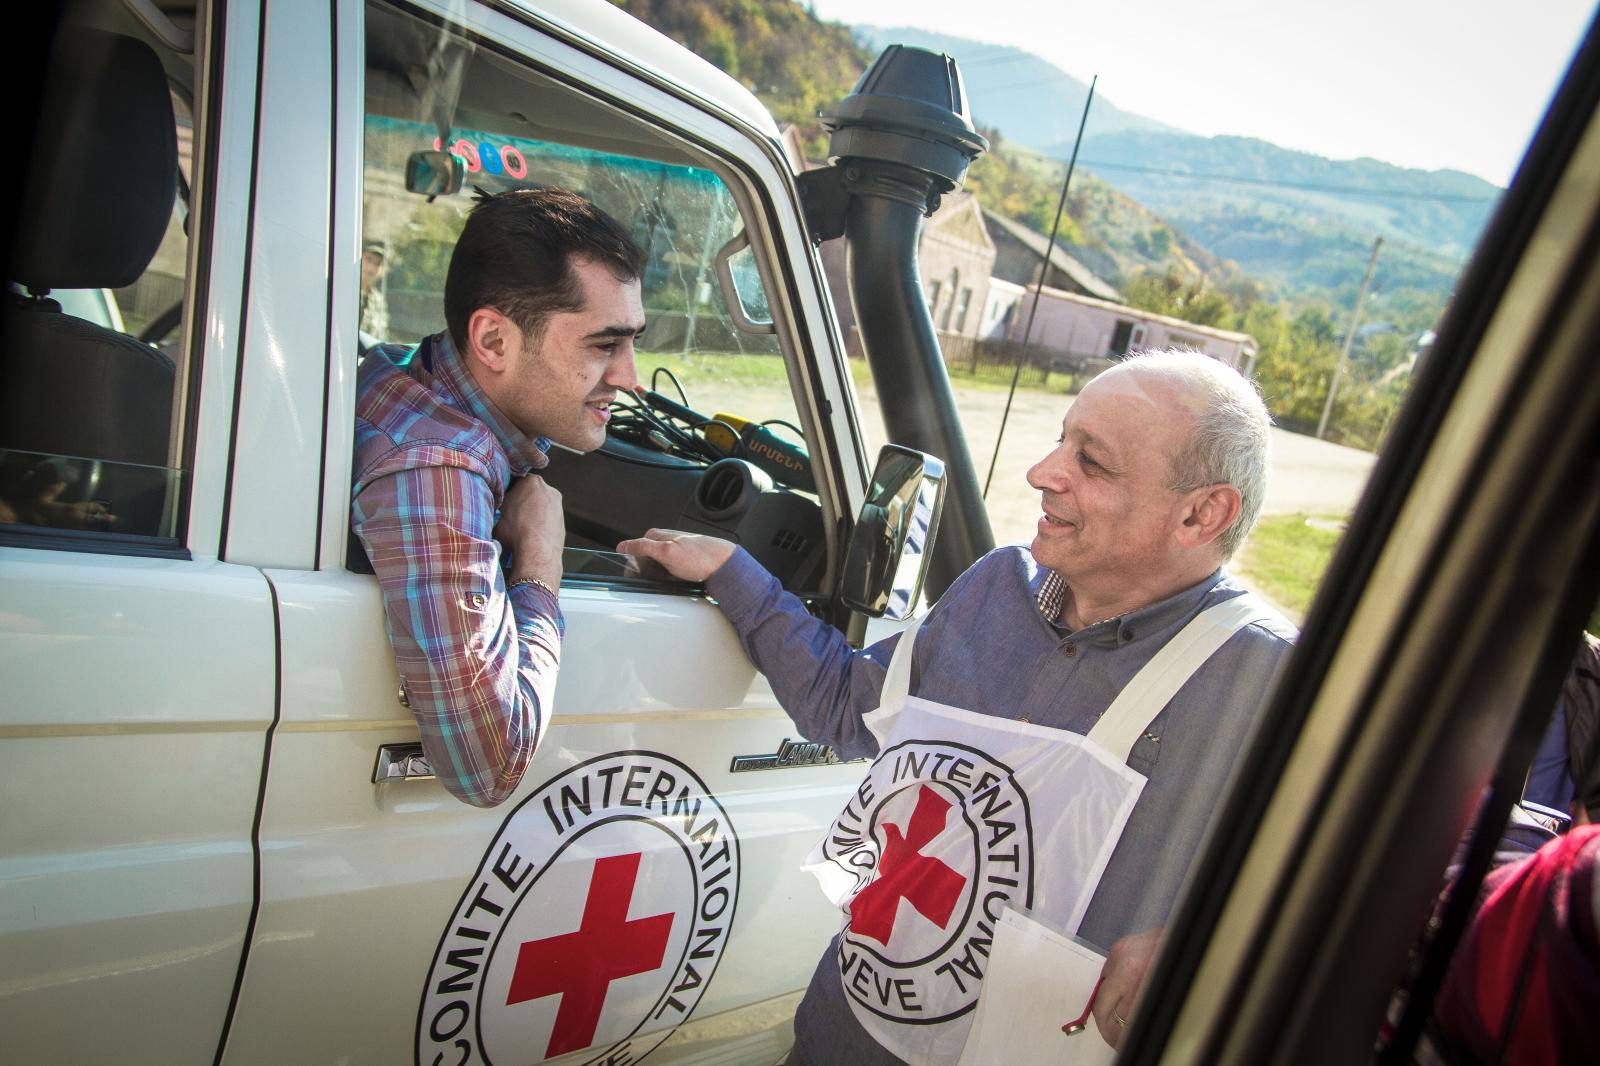 International Committee of the Red Cross in Armenia